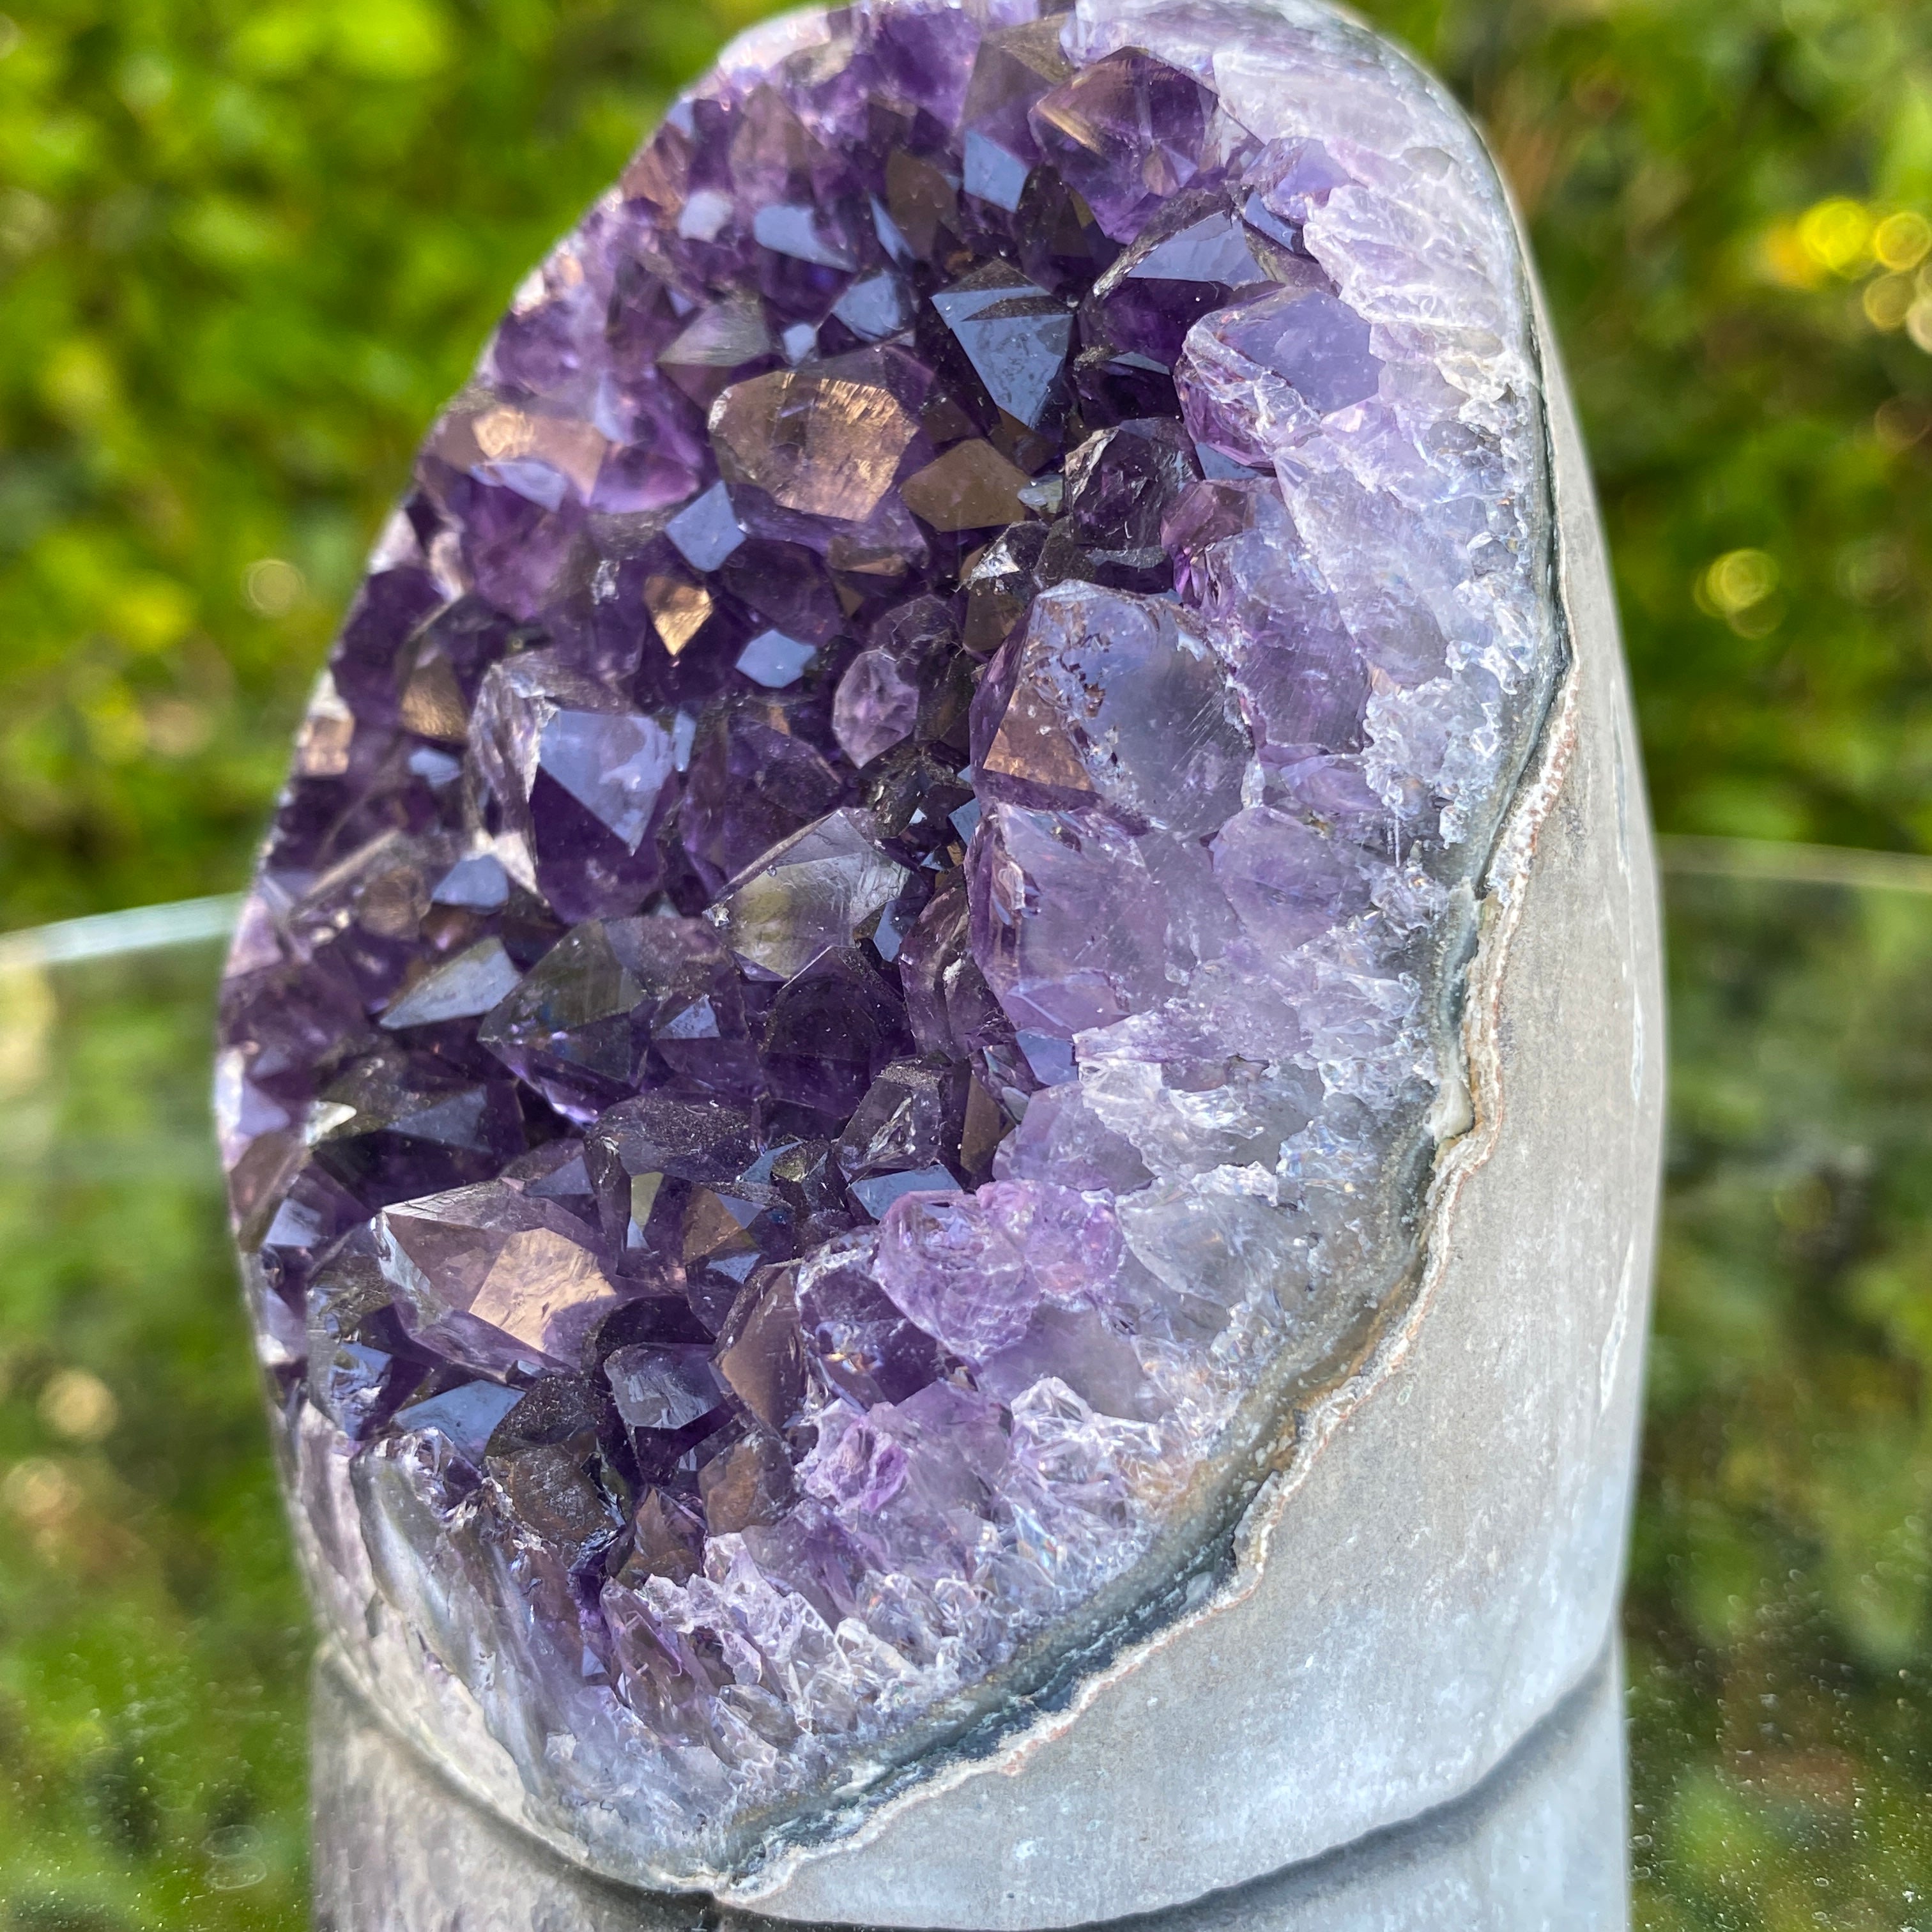 472g 8x8x7cm Grade A+ Big Smooth Crystal Purple Amethyst Geode from Uruguay